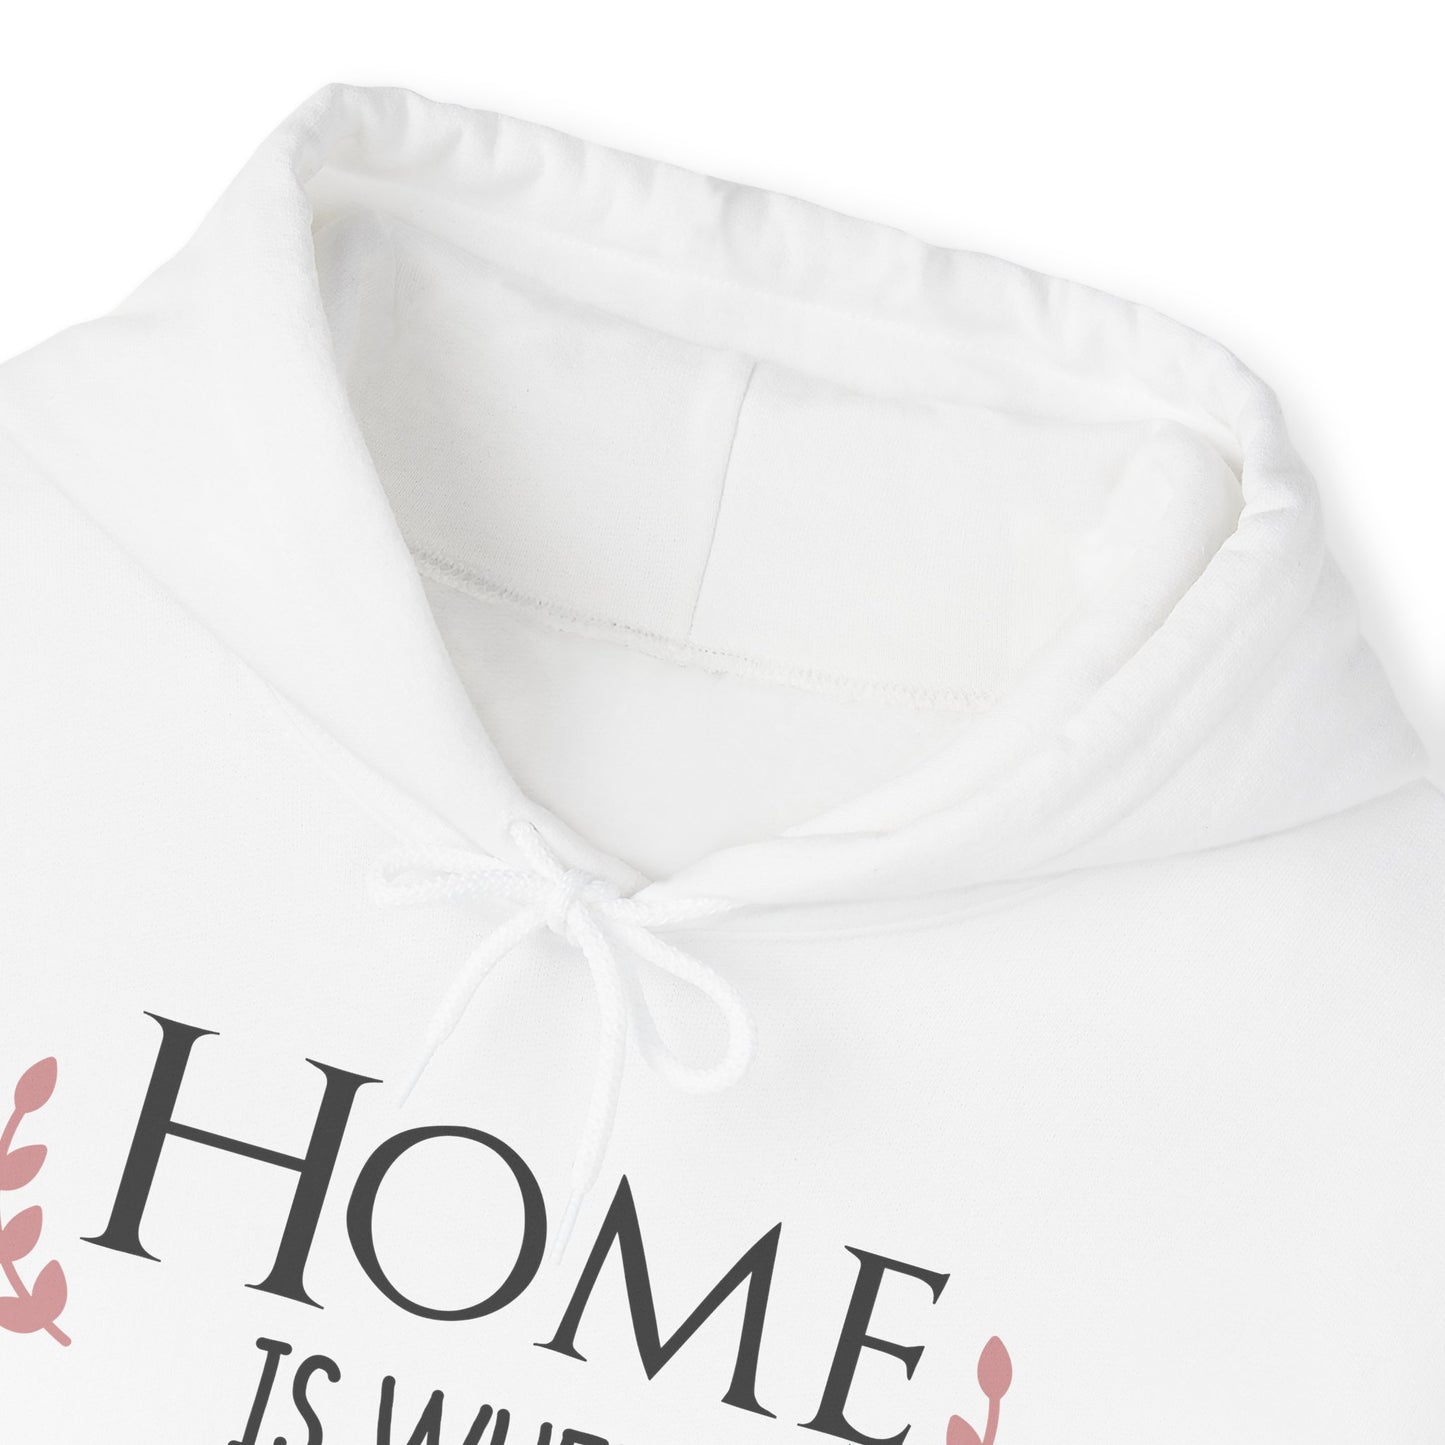 Home is where mom is - Unisex Heavy Blend™ Hooded Sweatshirt